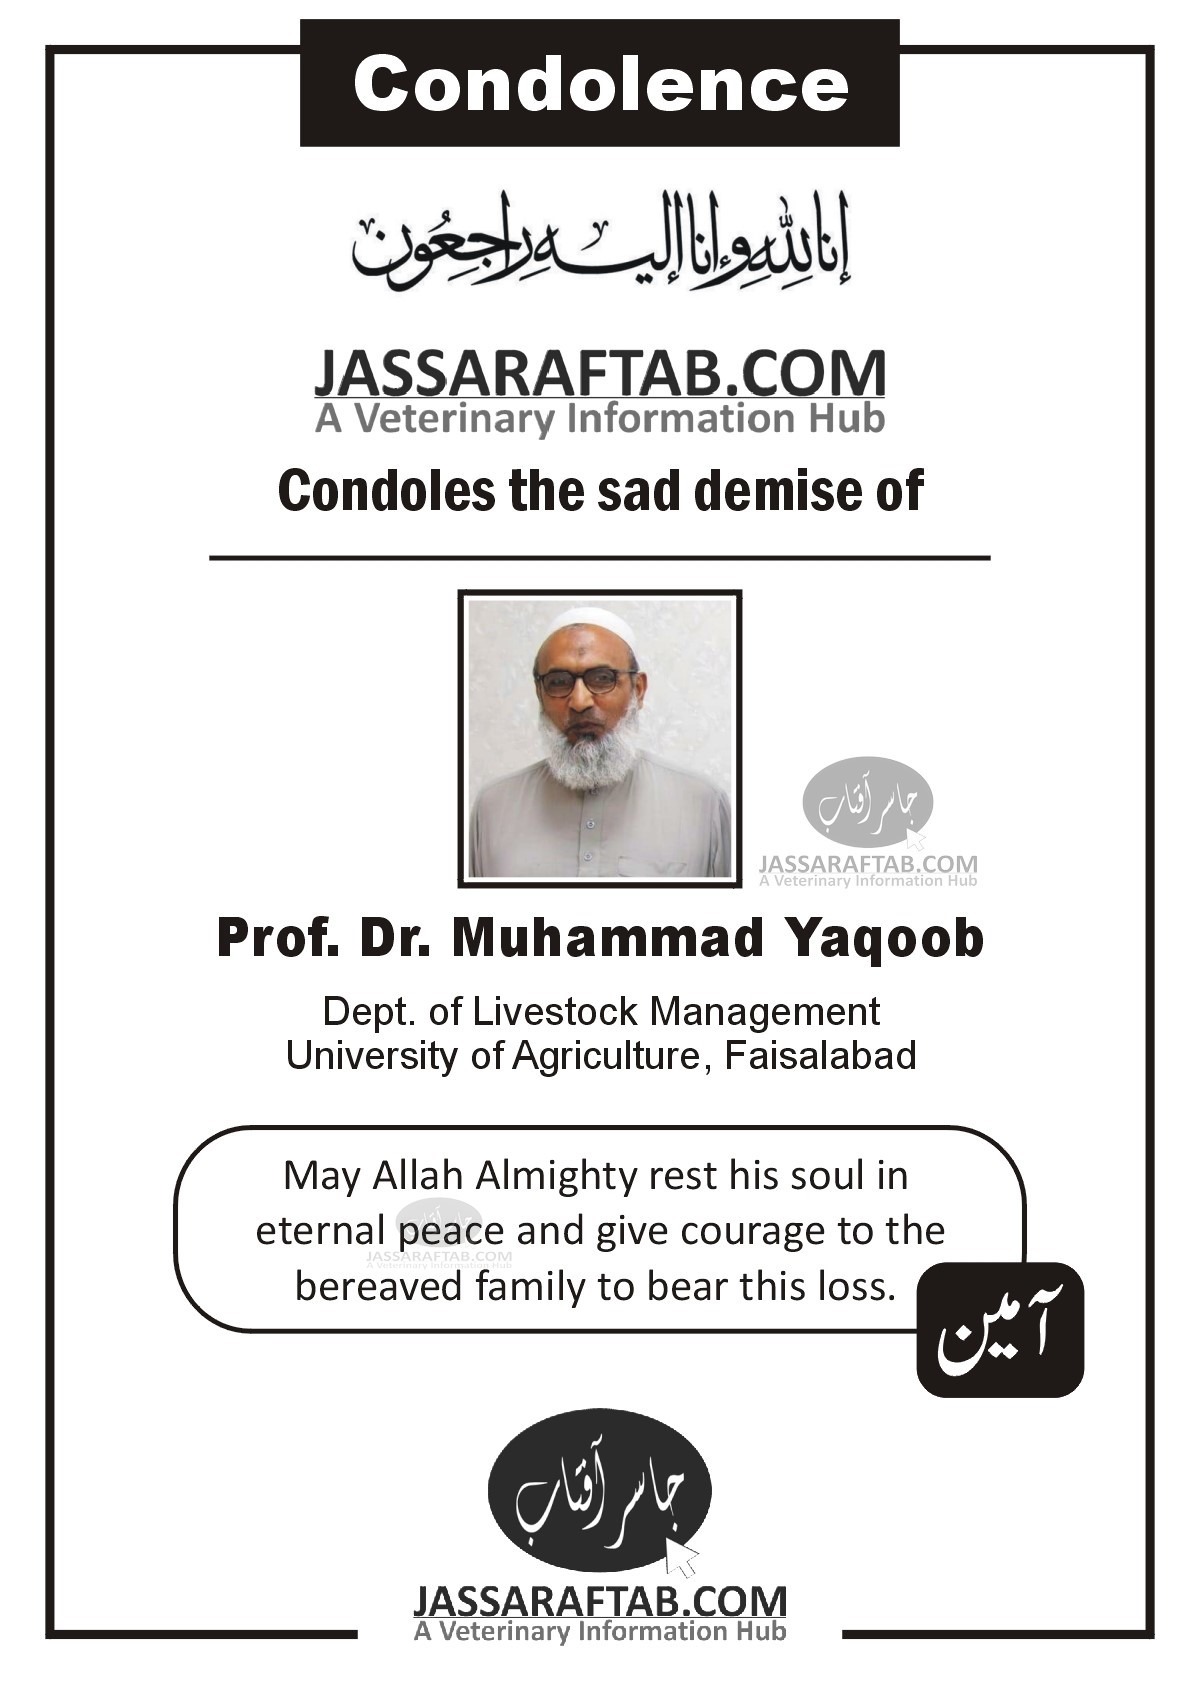 Condolence for the sad demise of Prof. Dr. Muhammad Yaqoob